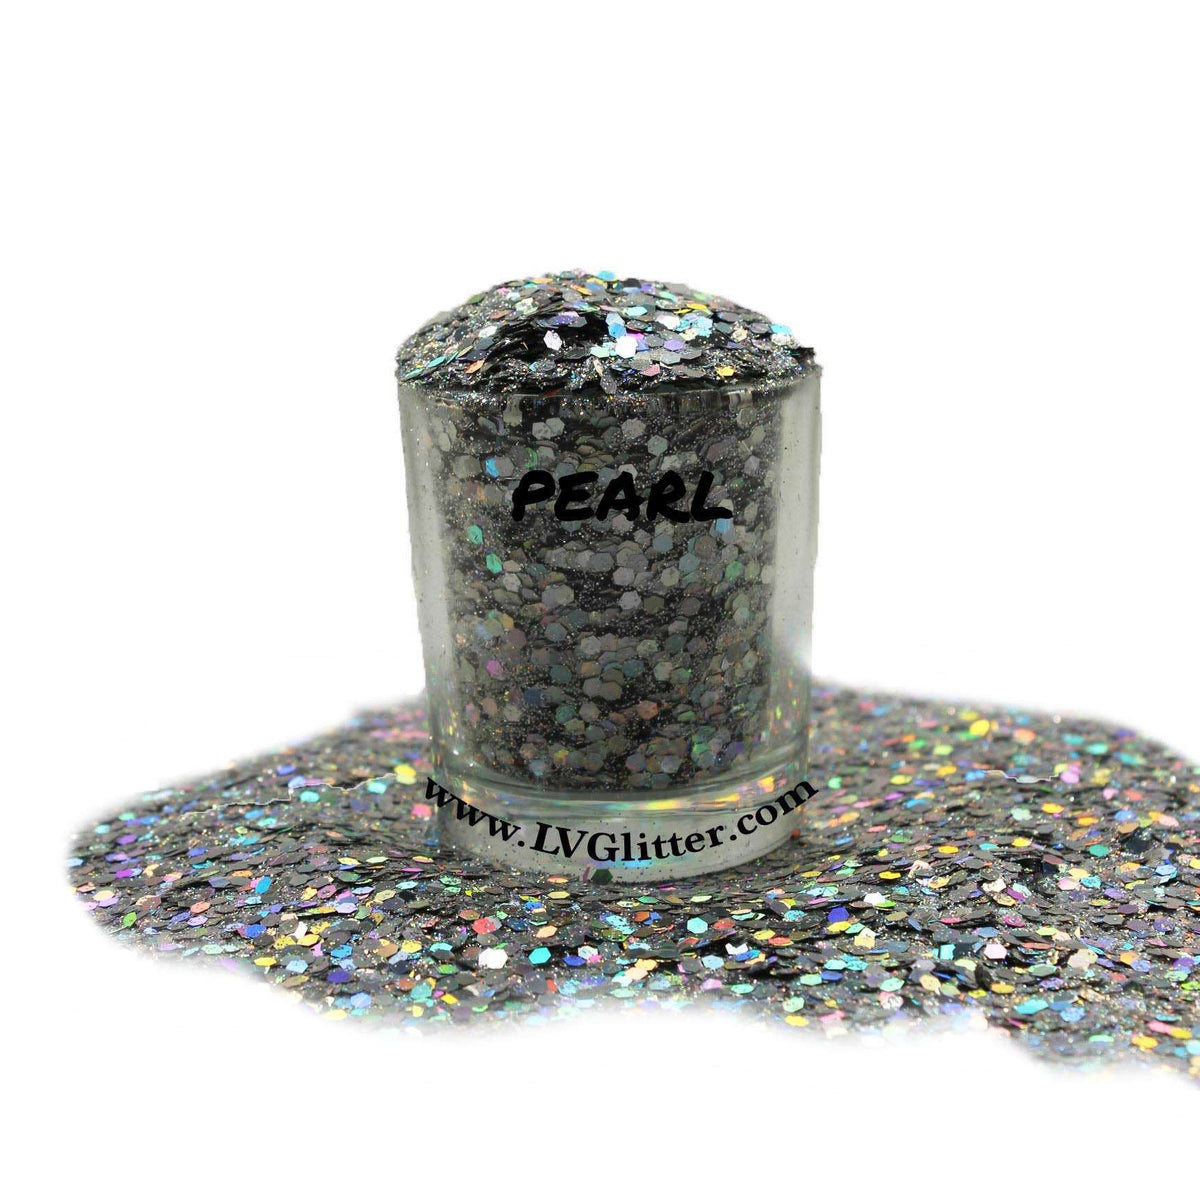 Silver Holographic Bulk Glitter - GL07 Silver Prism Extra Fine Cut .008